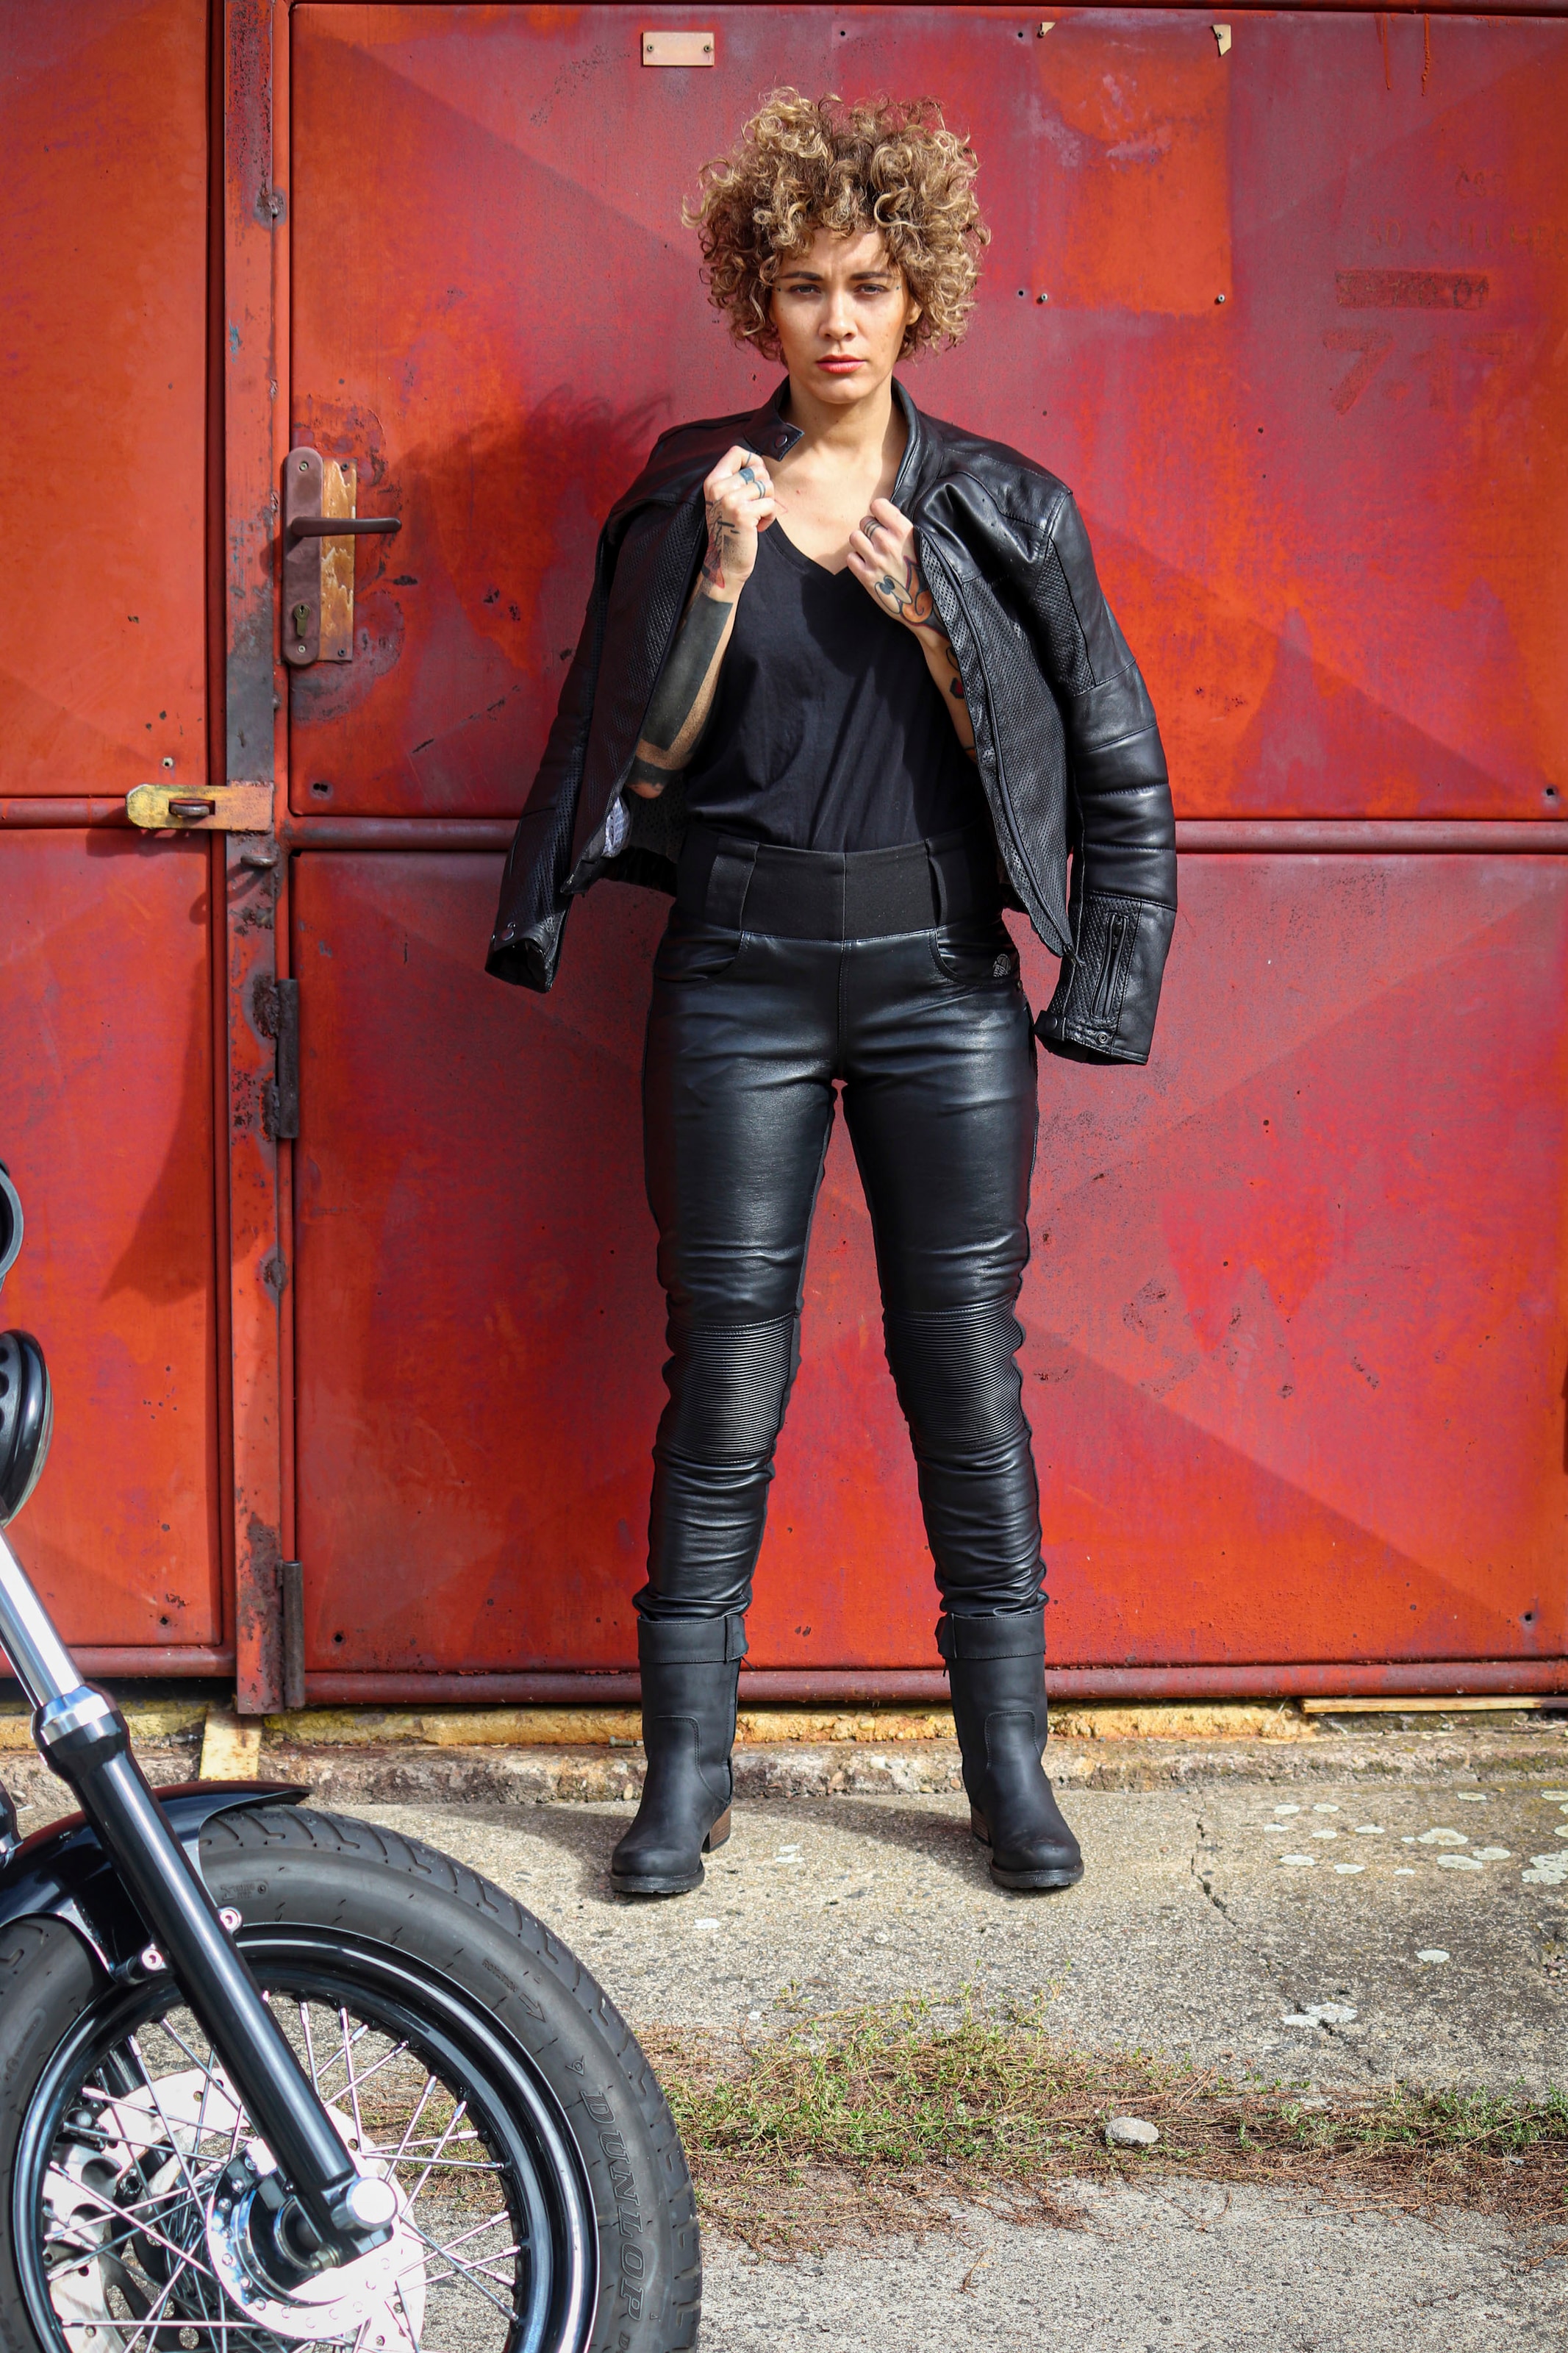 Falco Motorradhose, Leder-Leggings für Damen kaufen | BAUR